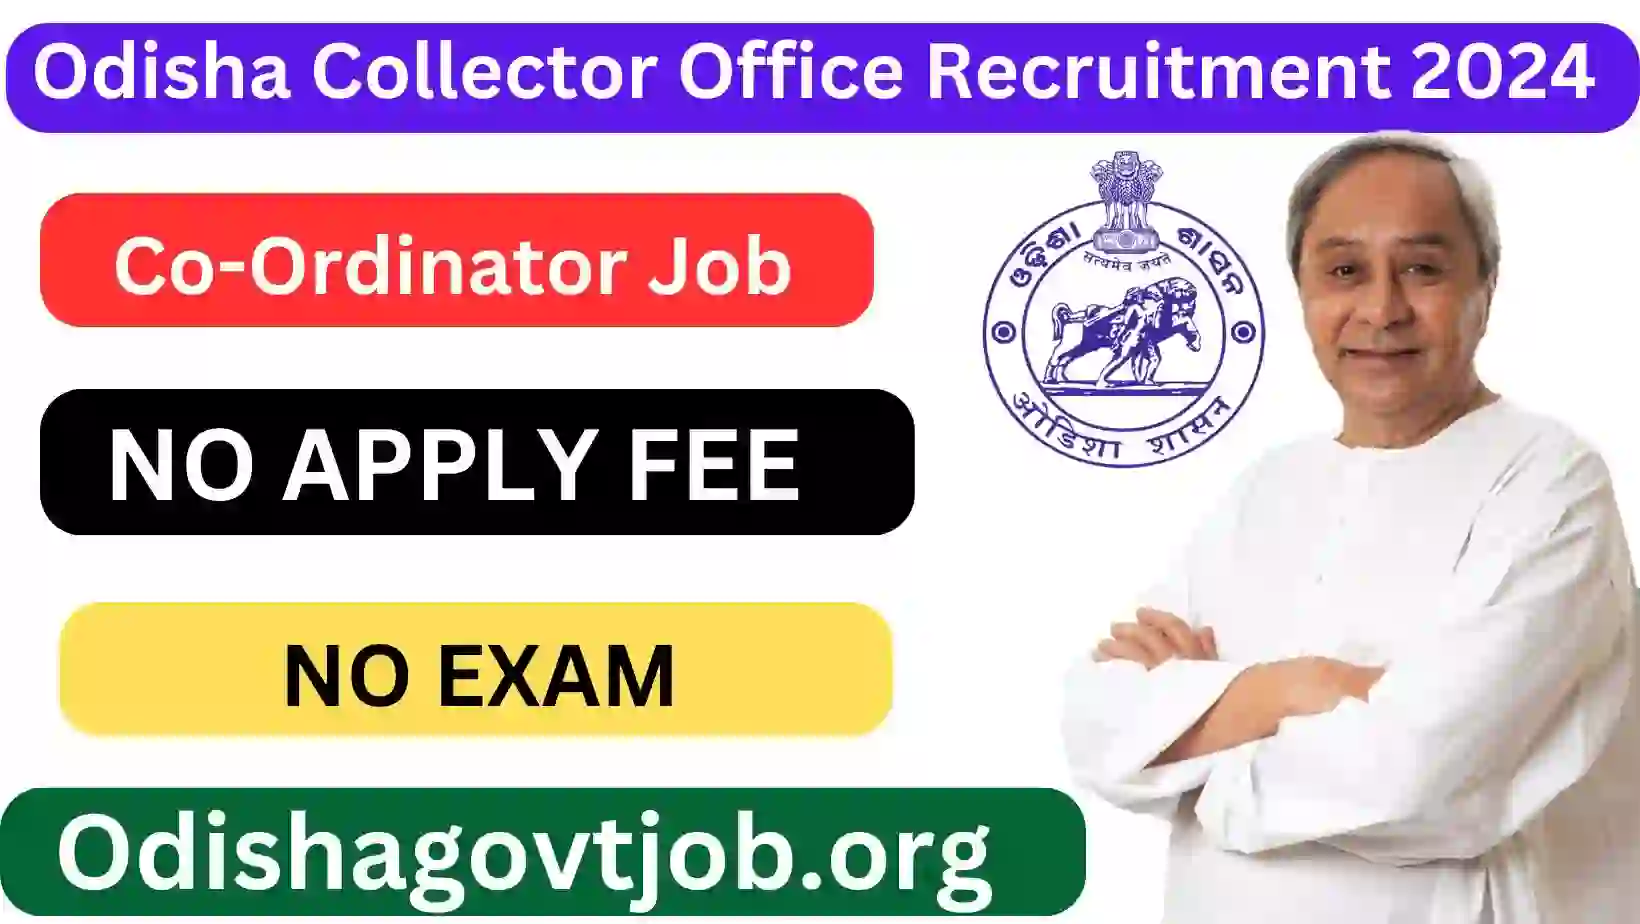 Odisha Collector Office Recruitment 2024